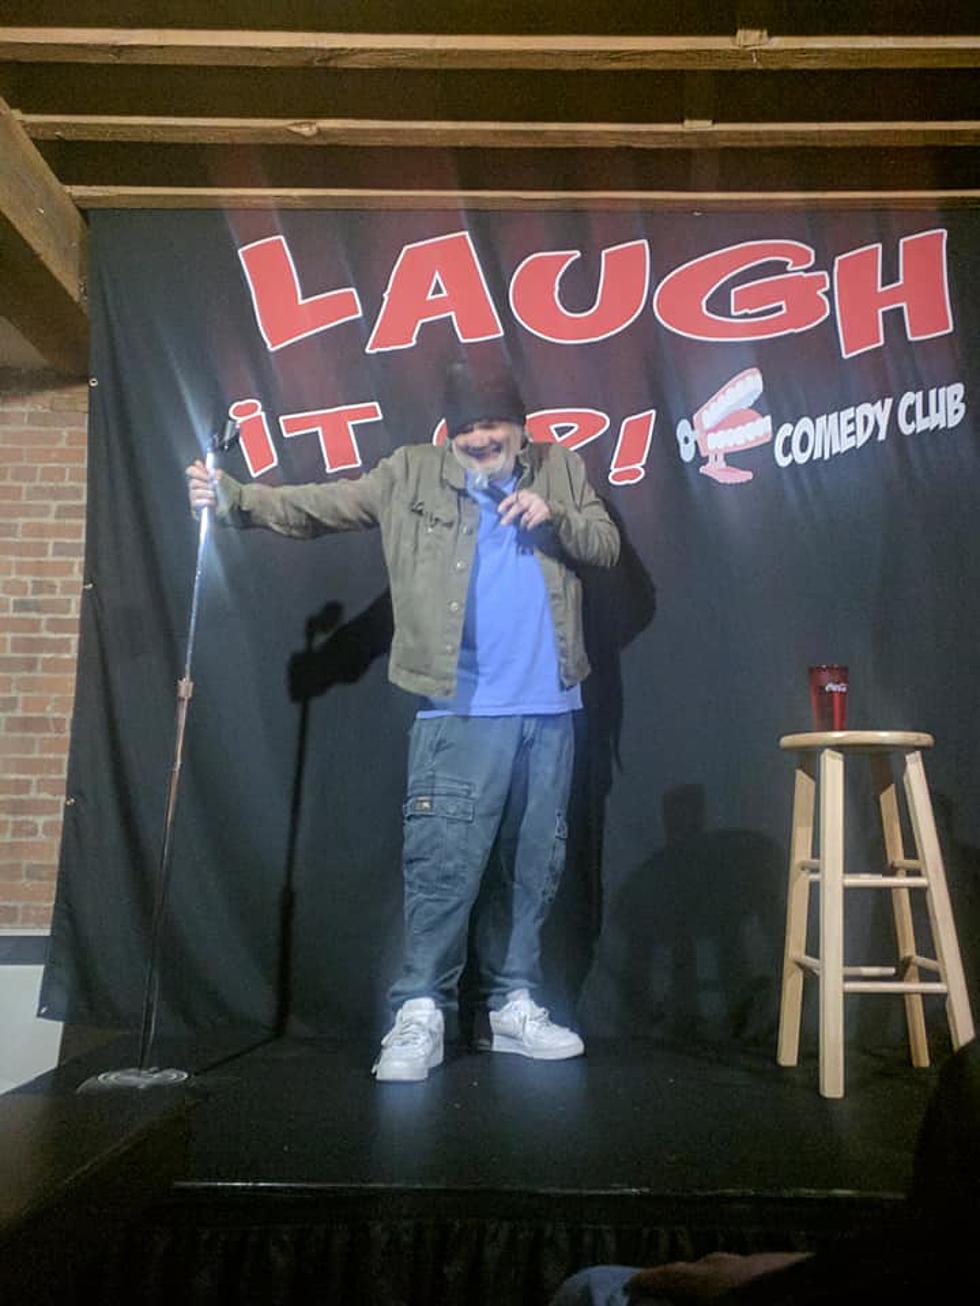 Popular Poughkeepsie Comedy Club Relocates Again…Across Street